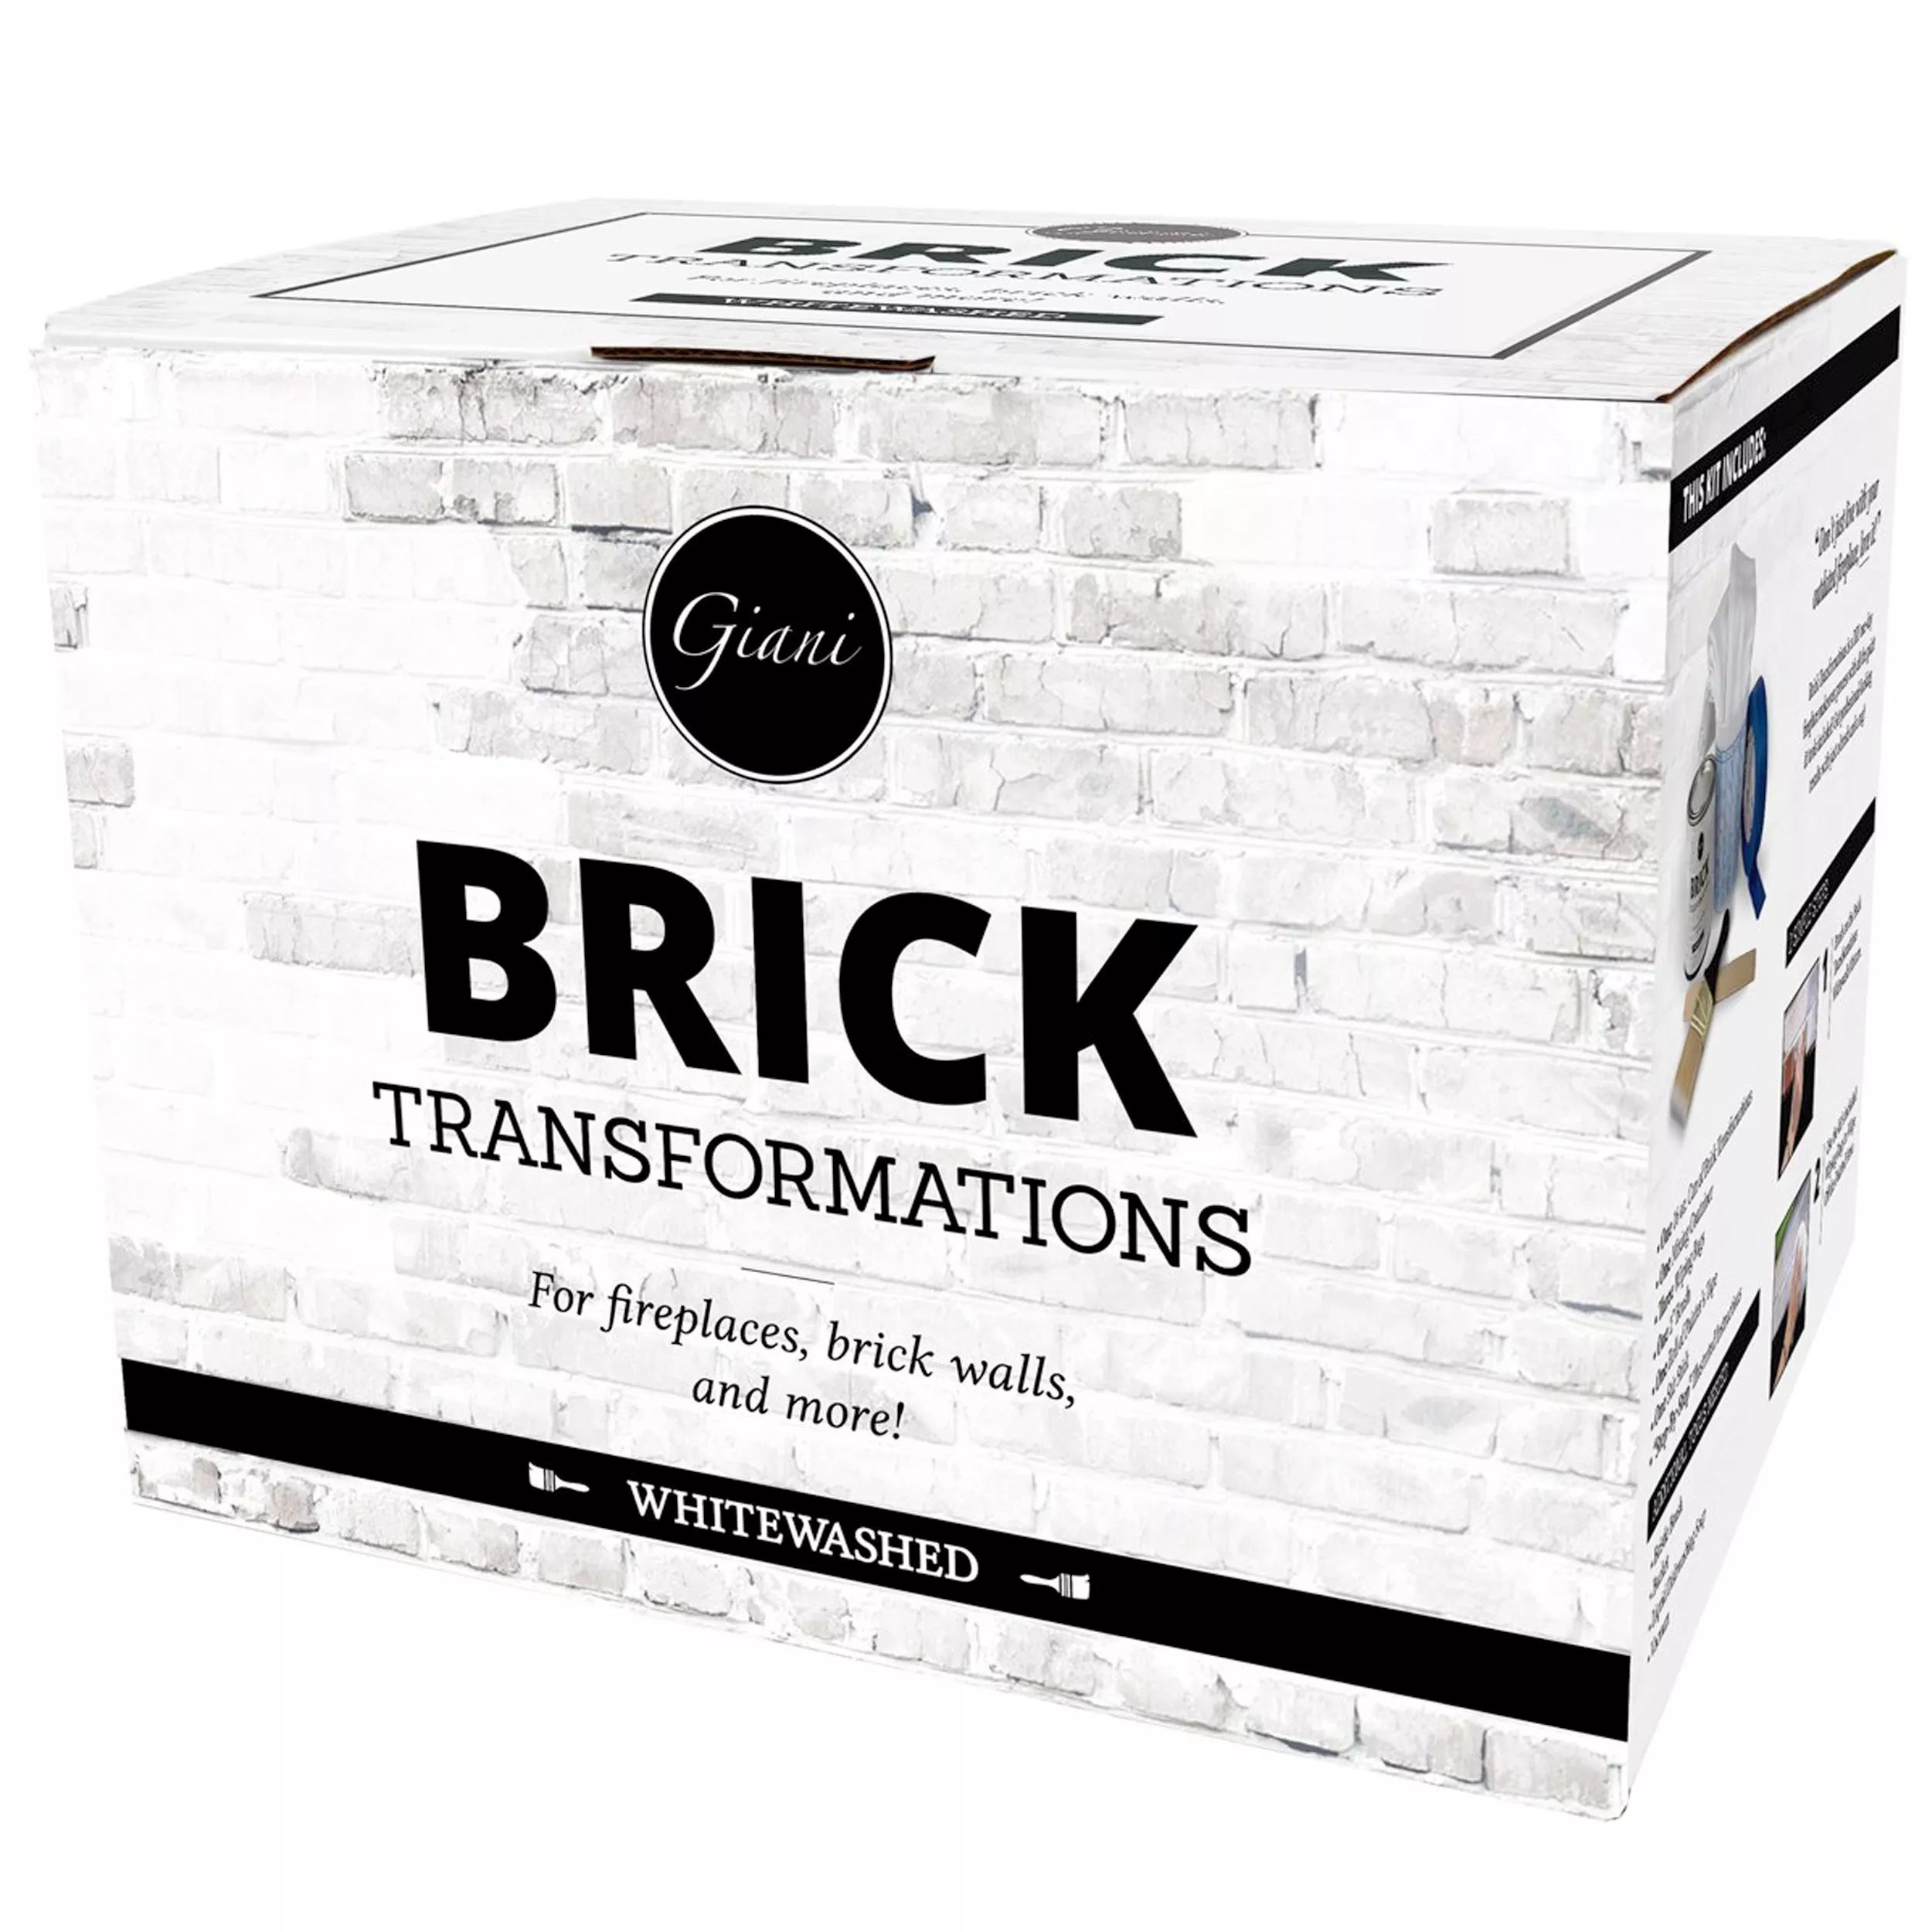 Brick Transformations Whitewashed